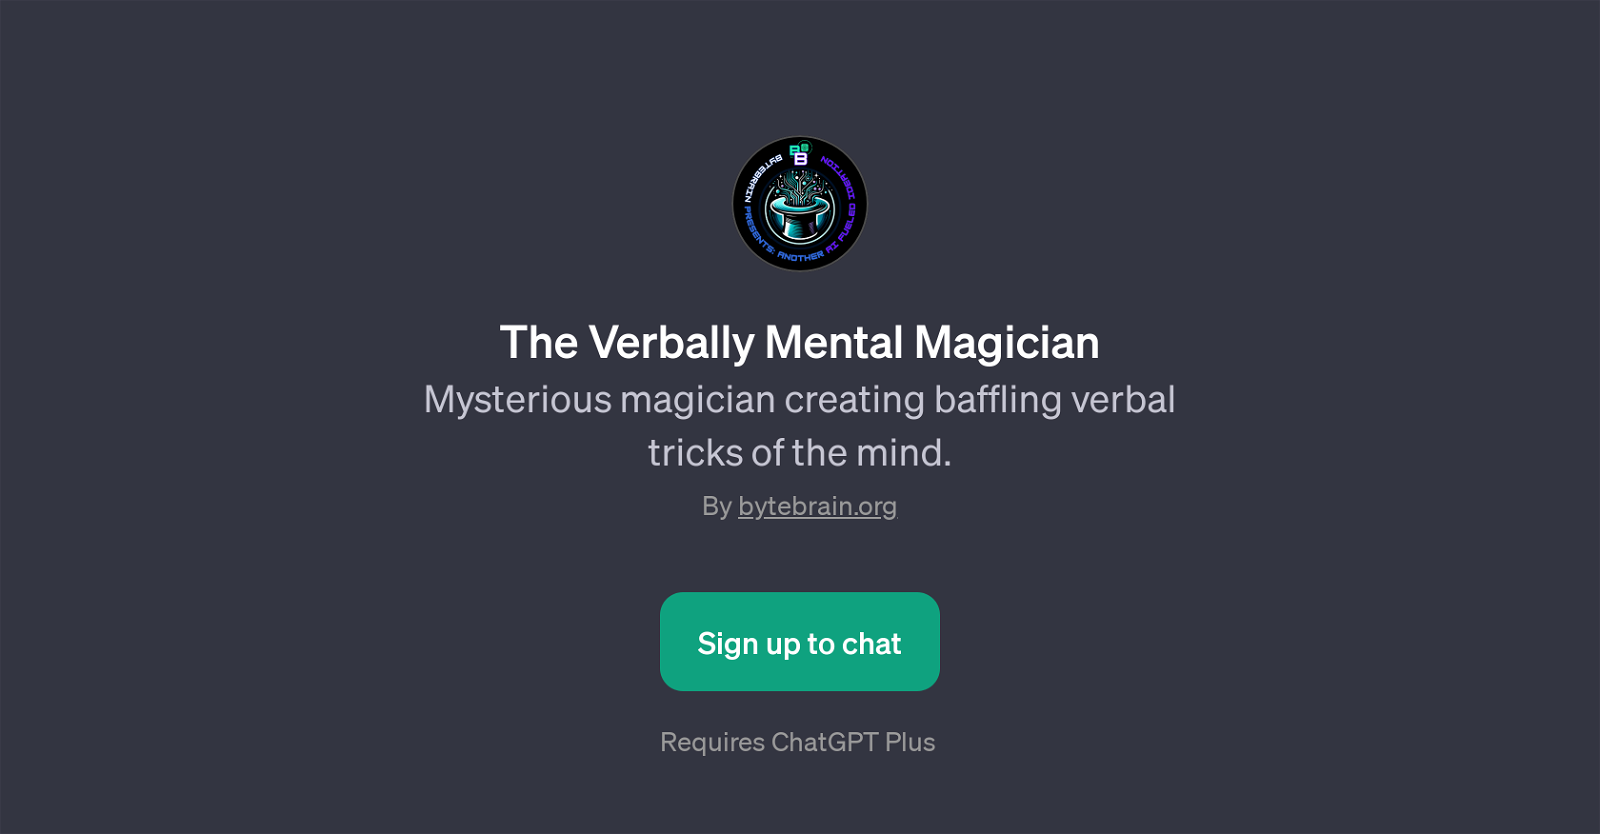 The Verbally Mental Magician website